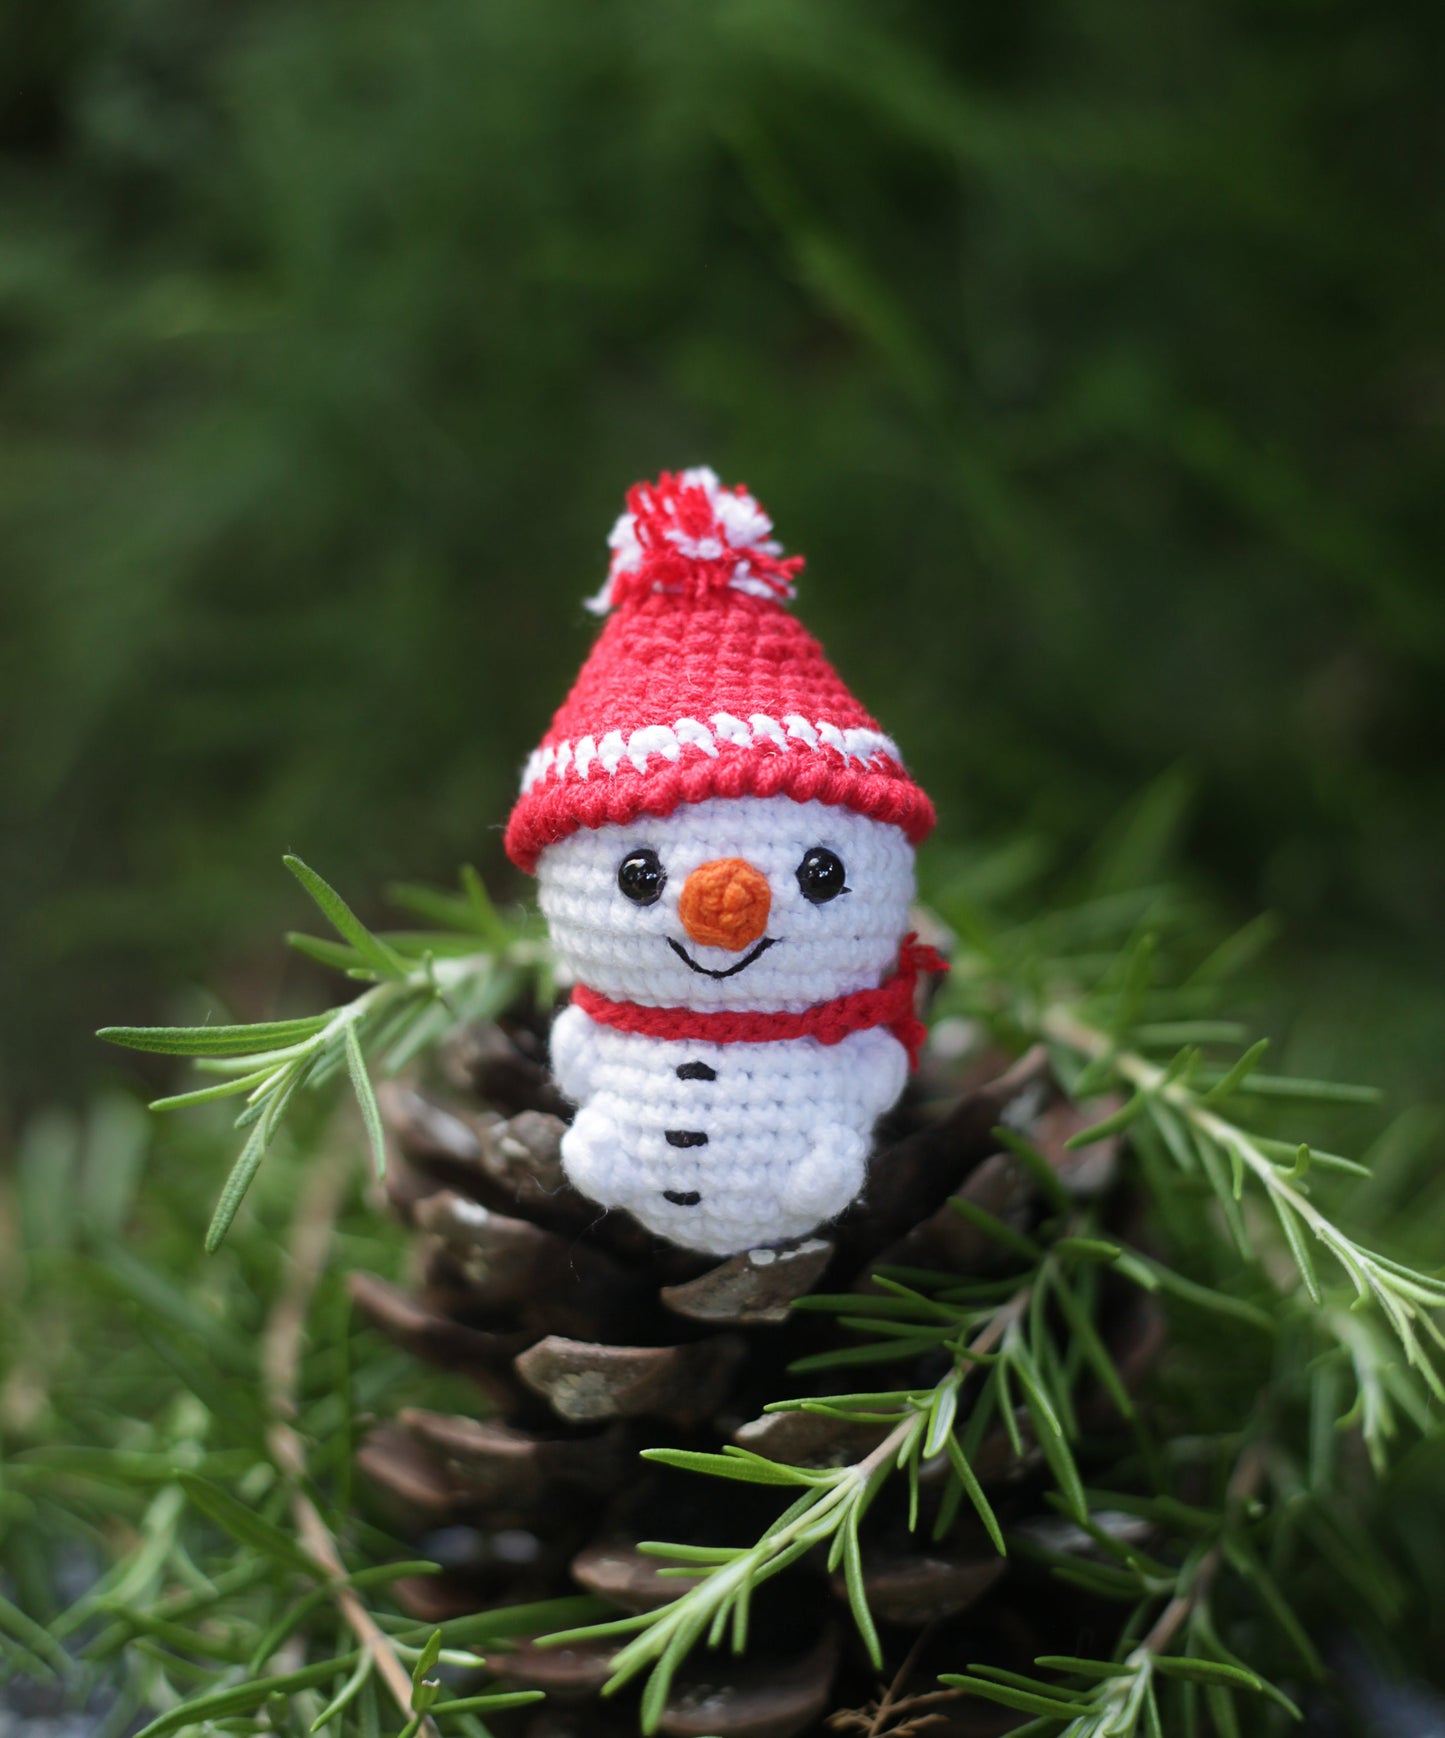 Snowman crochet mini doll Christmas ornament